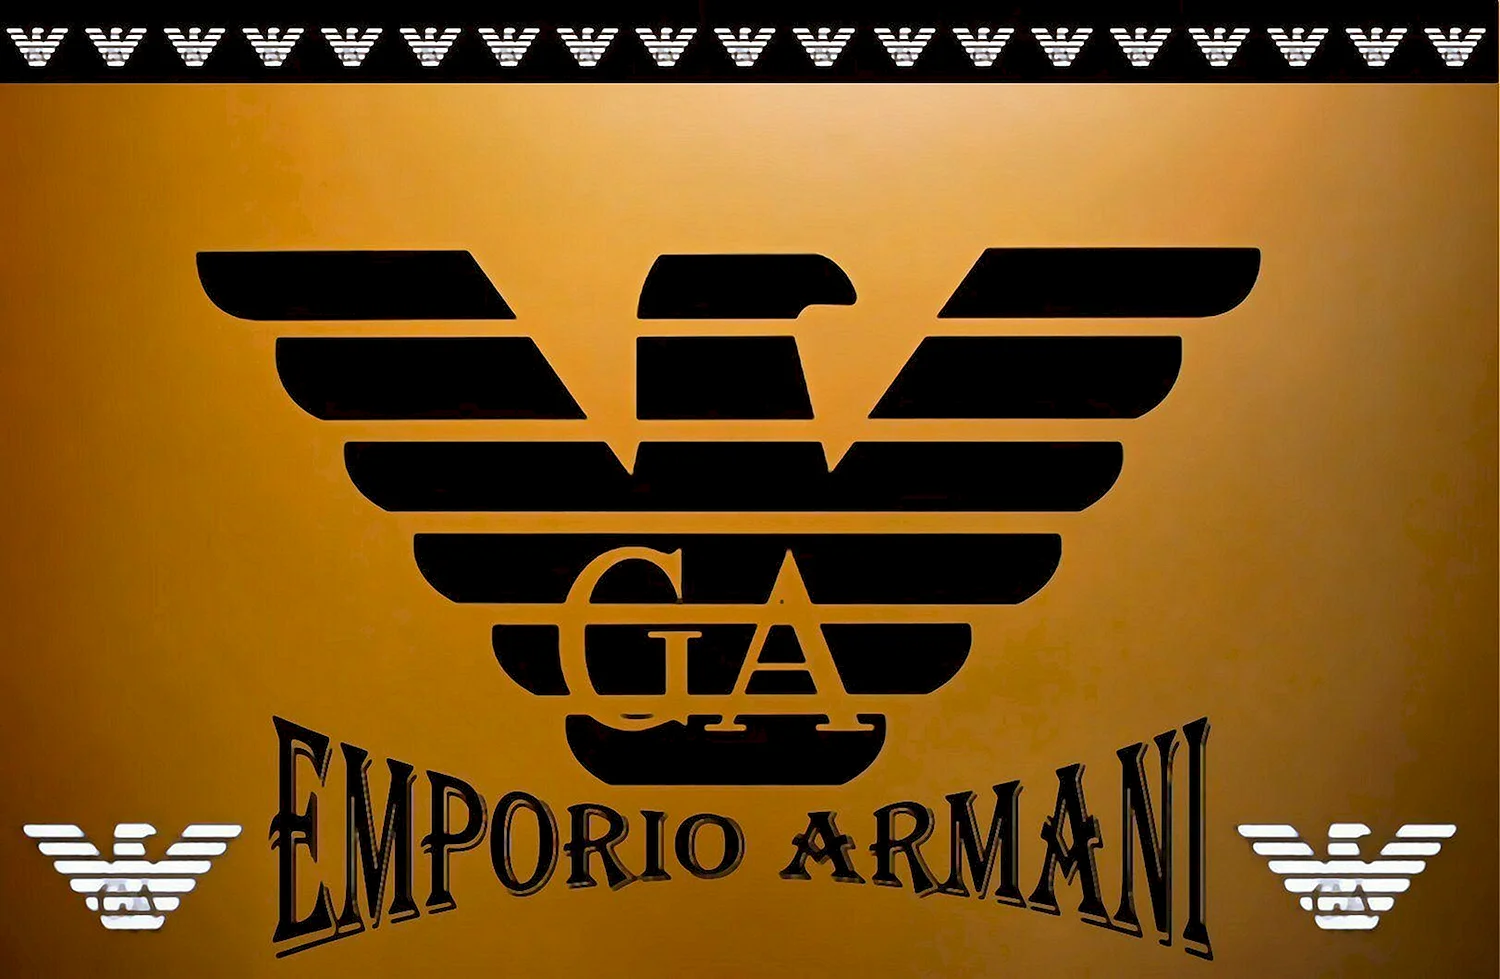 Логотип армани (35 лучших фото)